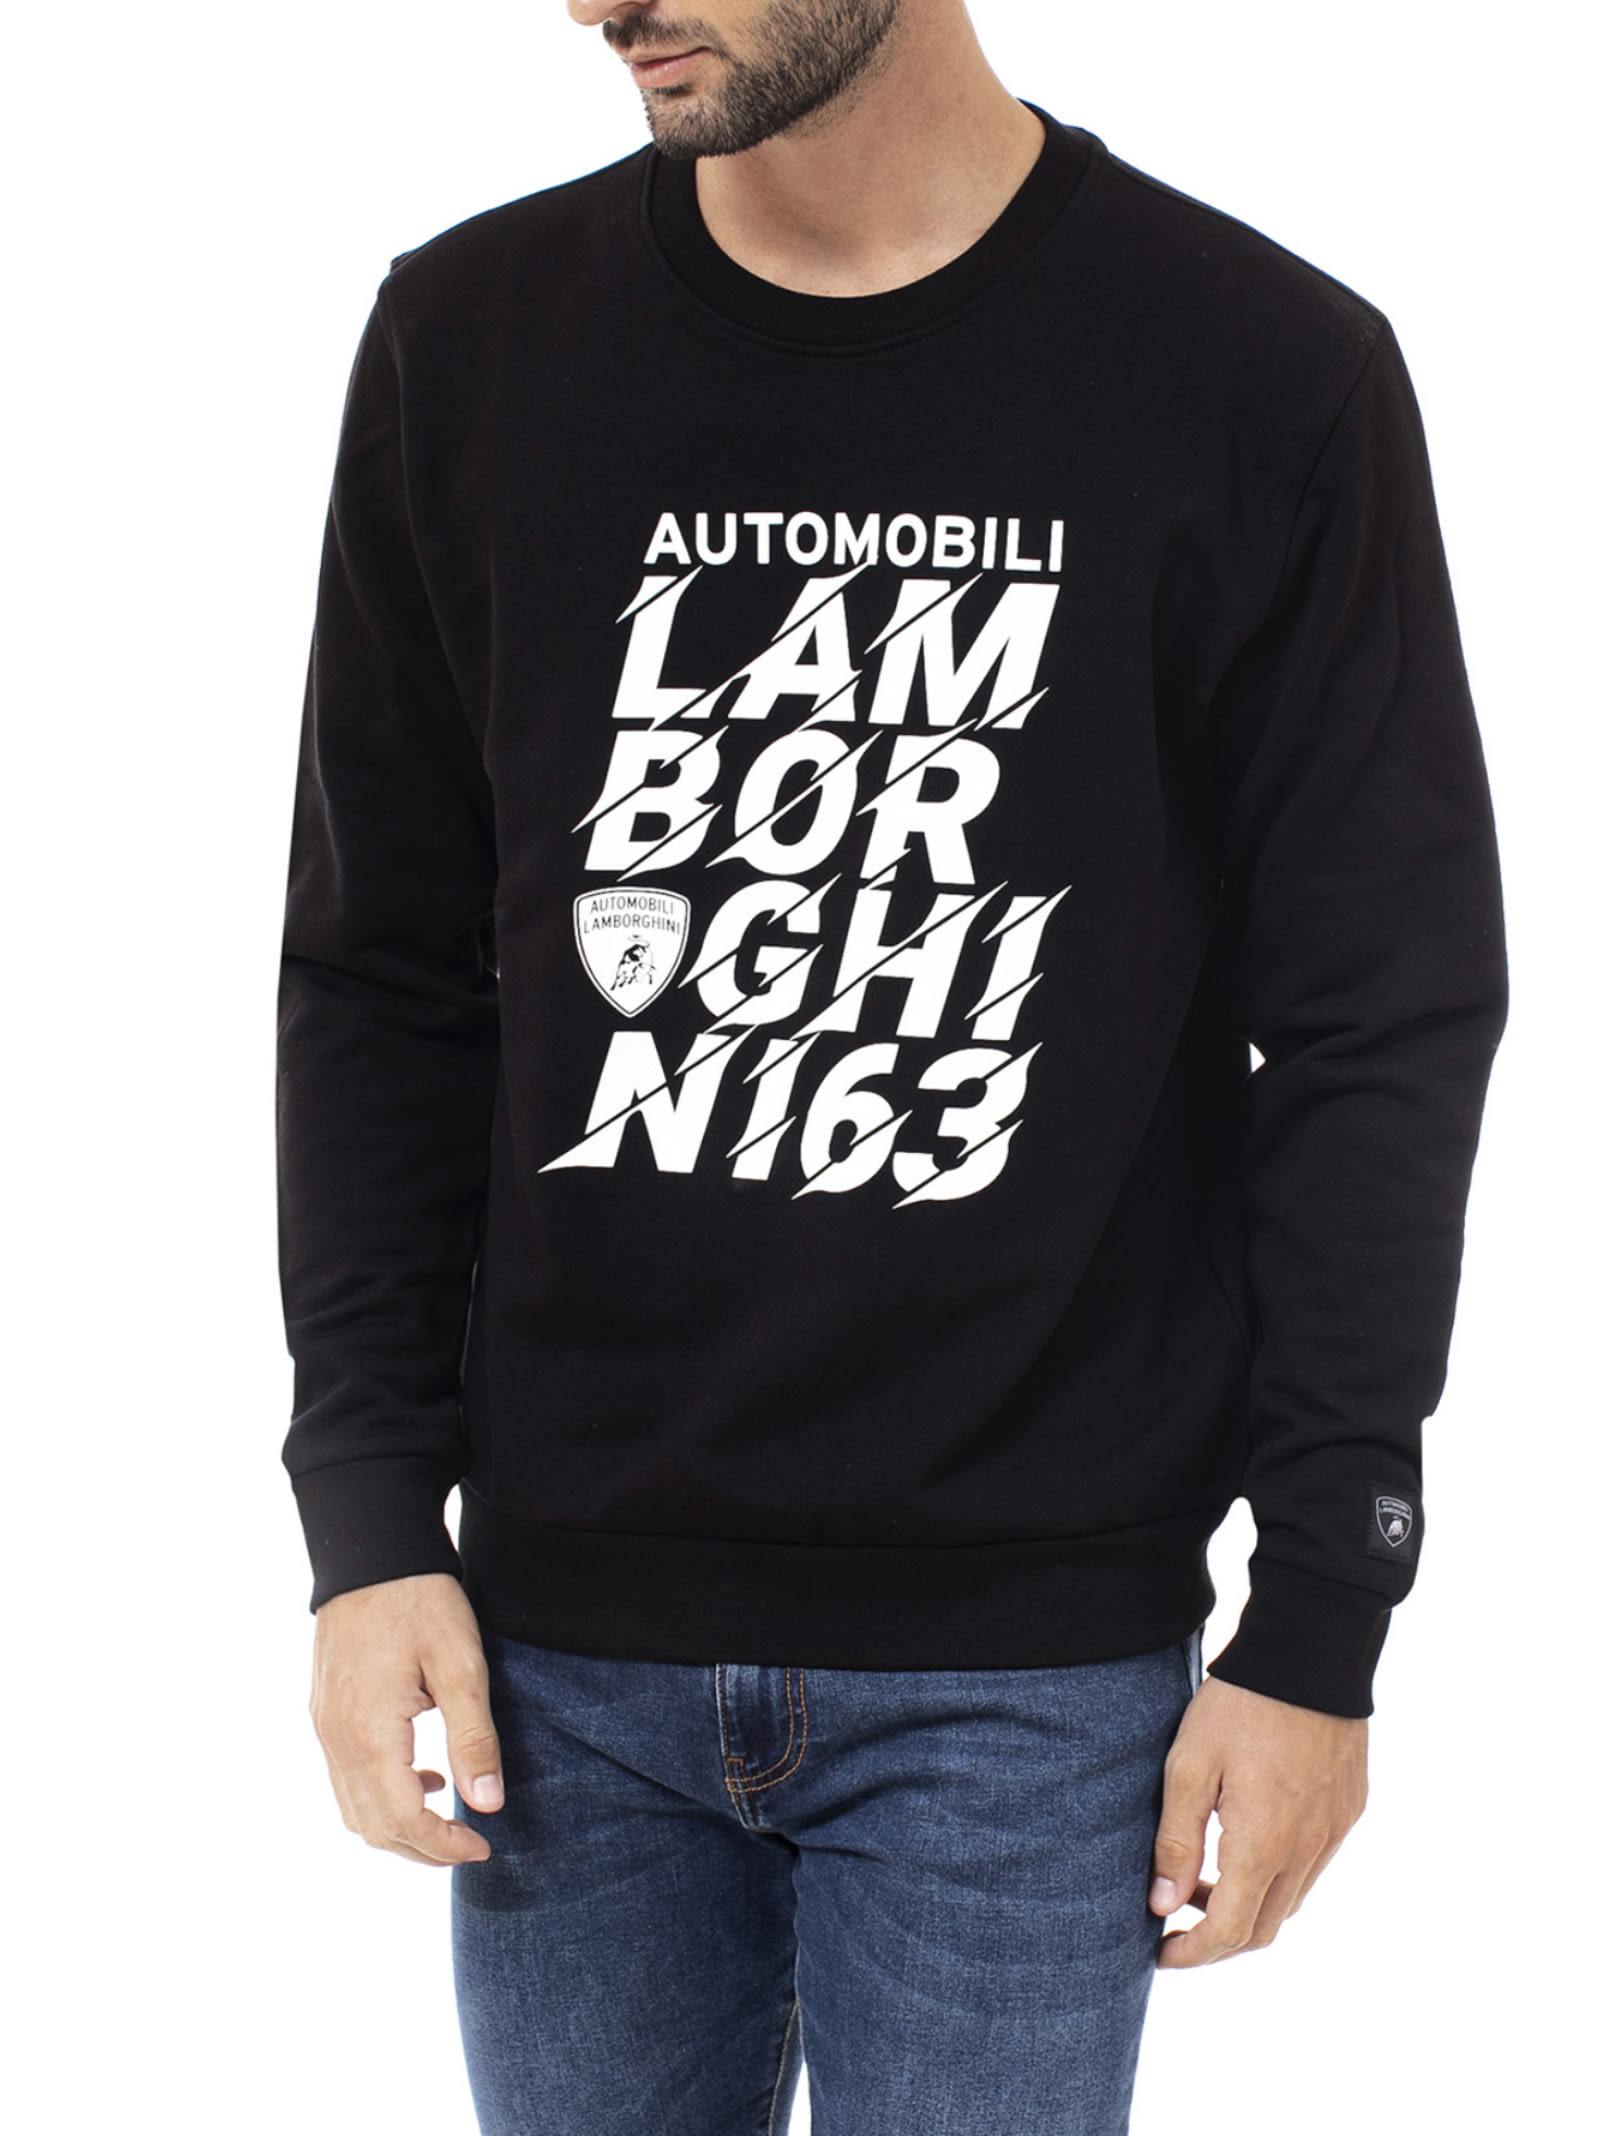 Automobili Lamborghini Crew Neck Sweatshirt With Lamborghini Logo